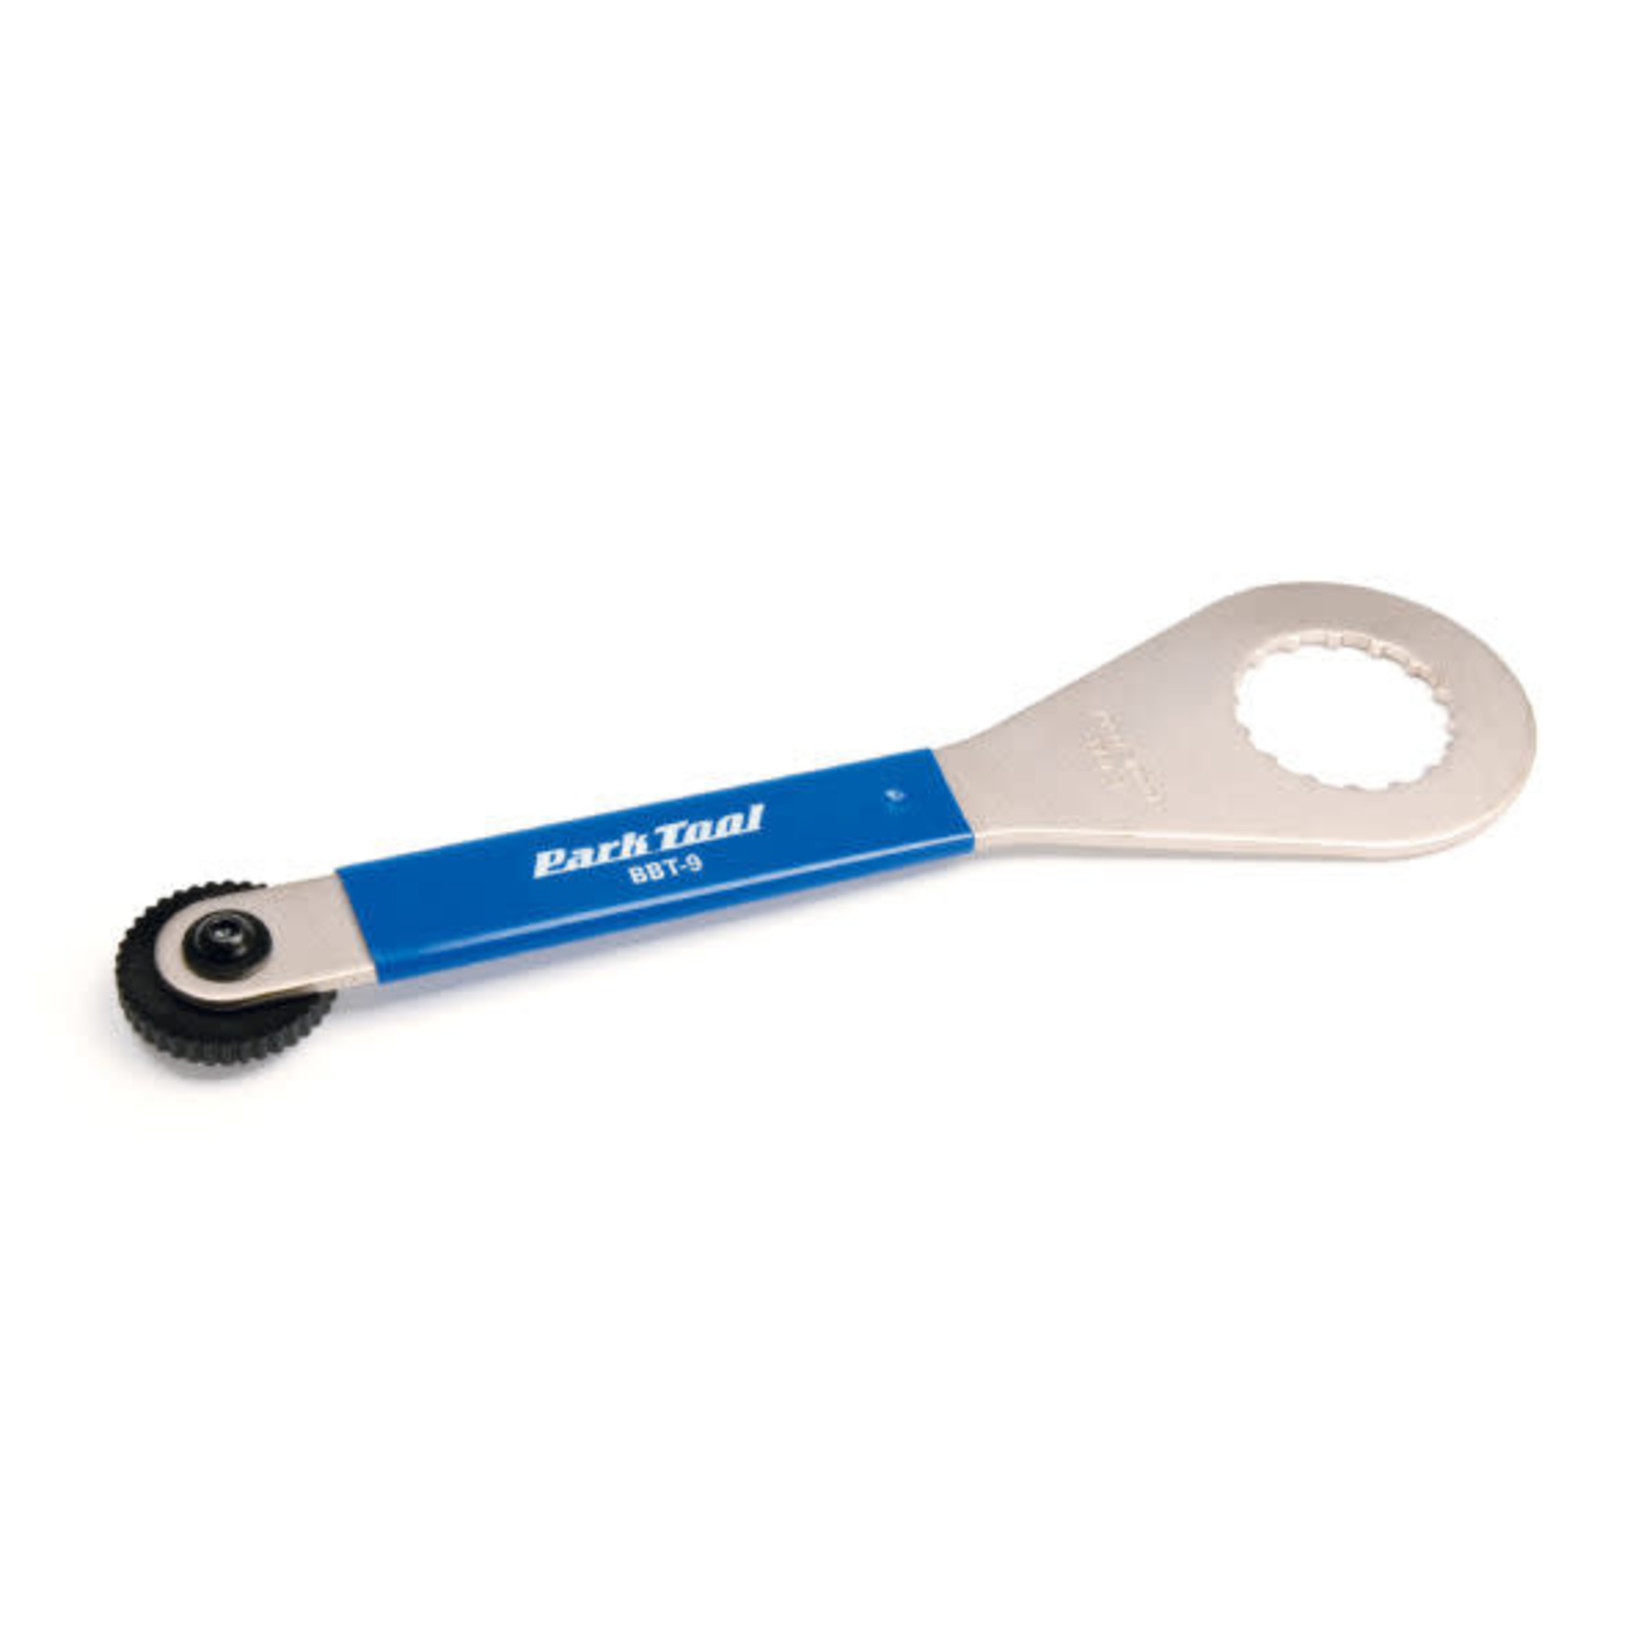 Park Tool Park Tool BBT-9 Bottom bracket tool